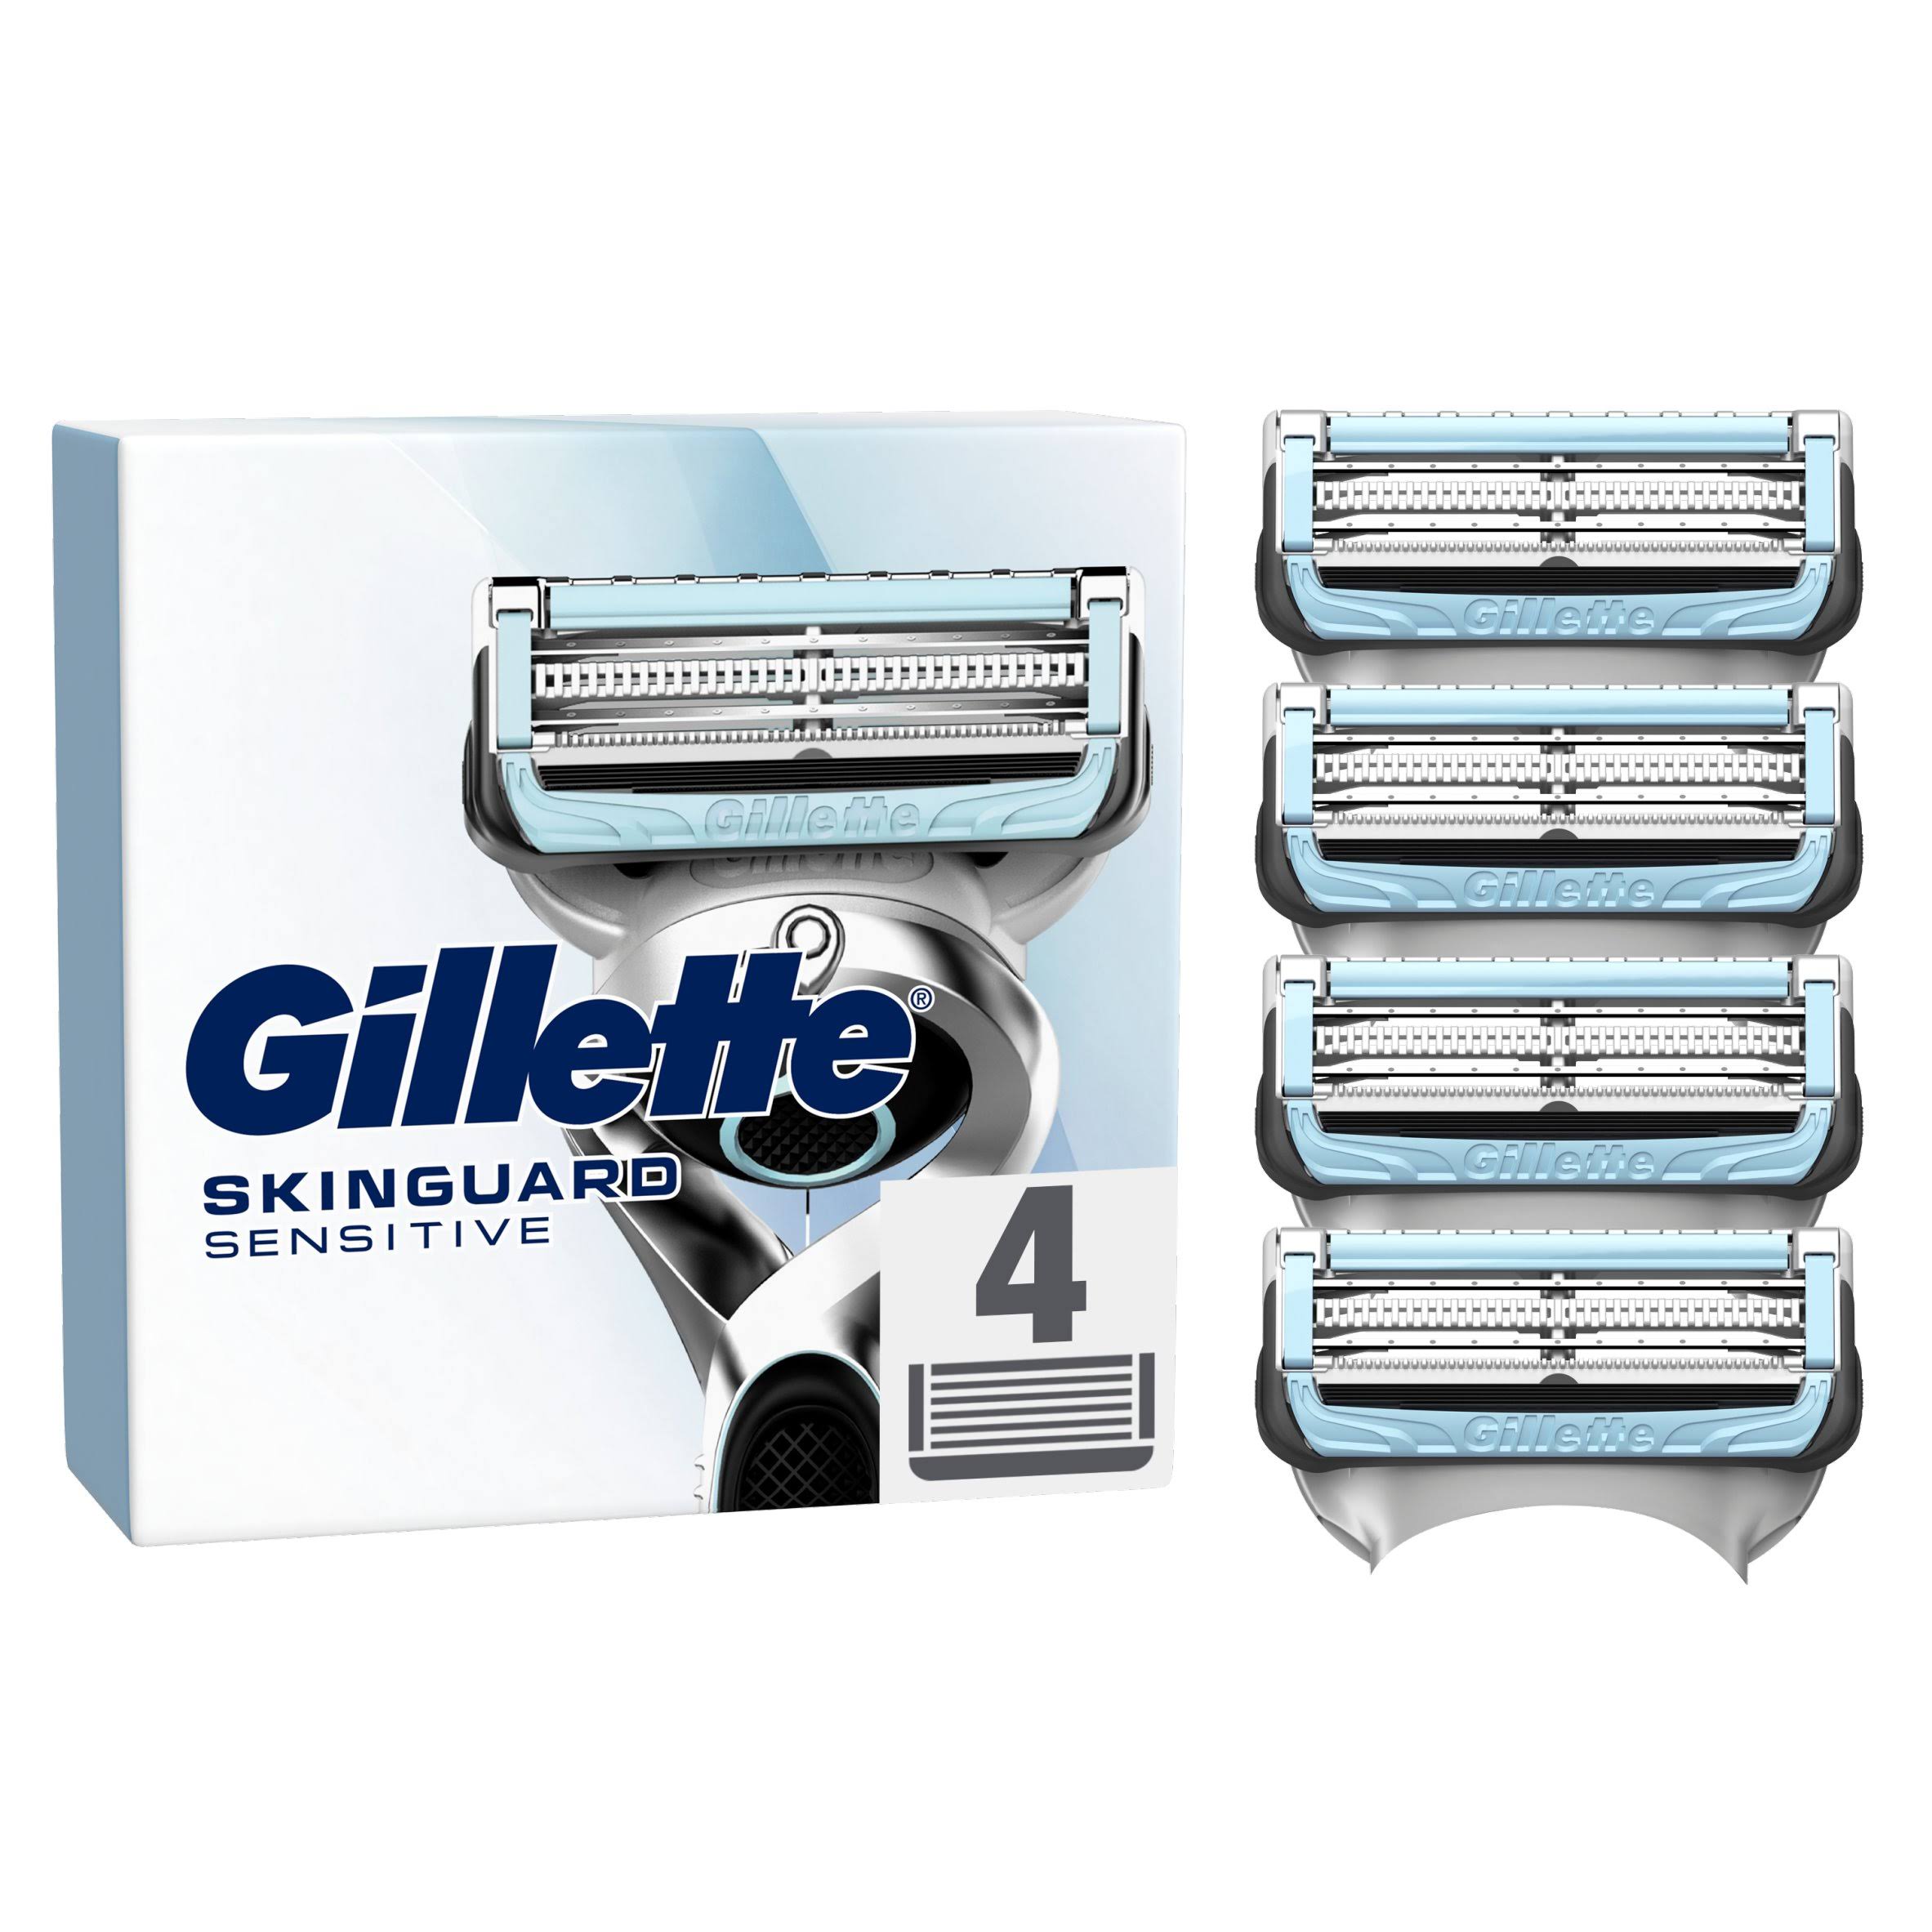 Gillette SkinGuard Sensitive Razor Blades - For Men, 4 Refills